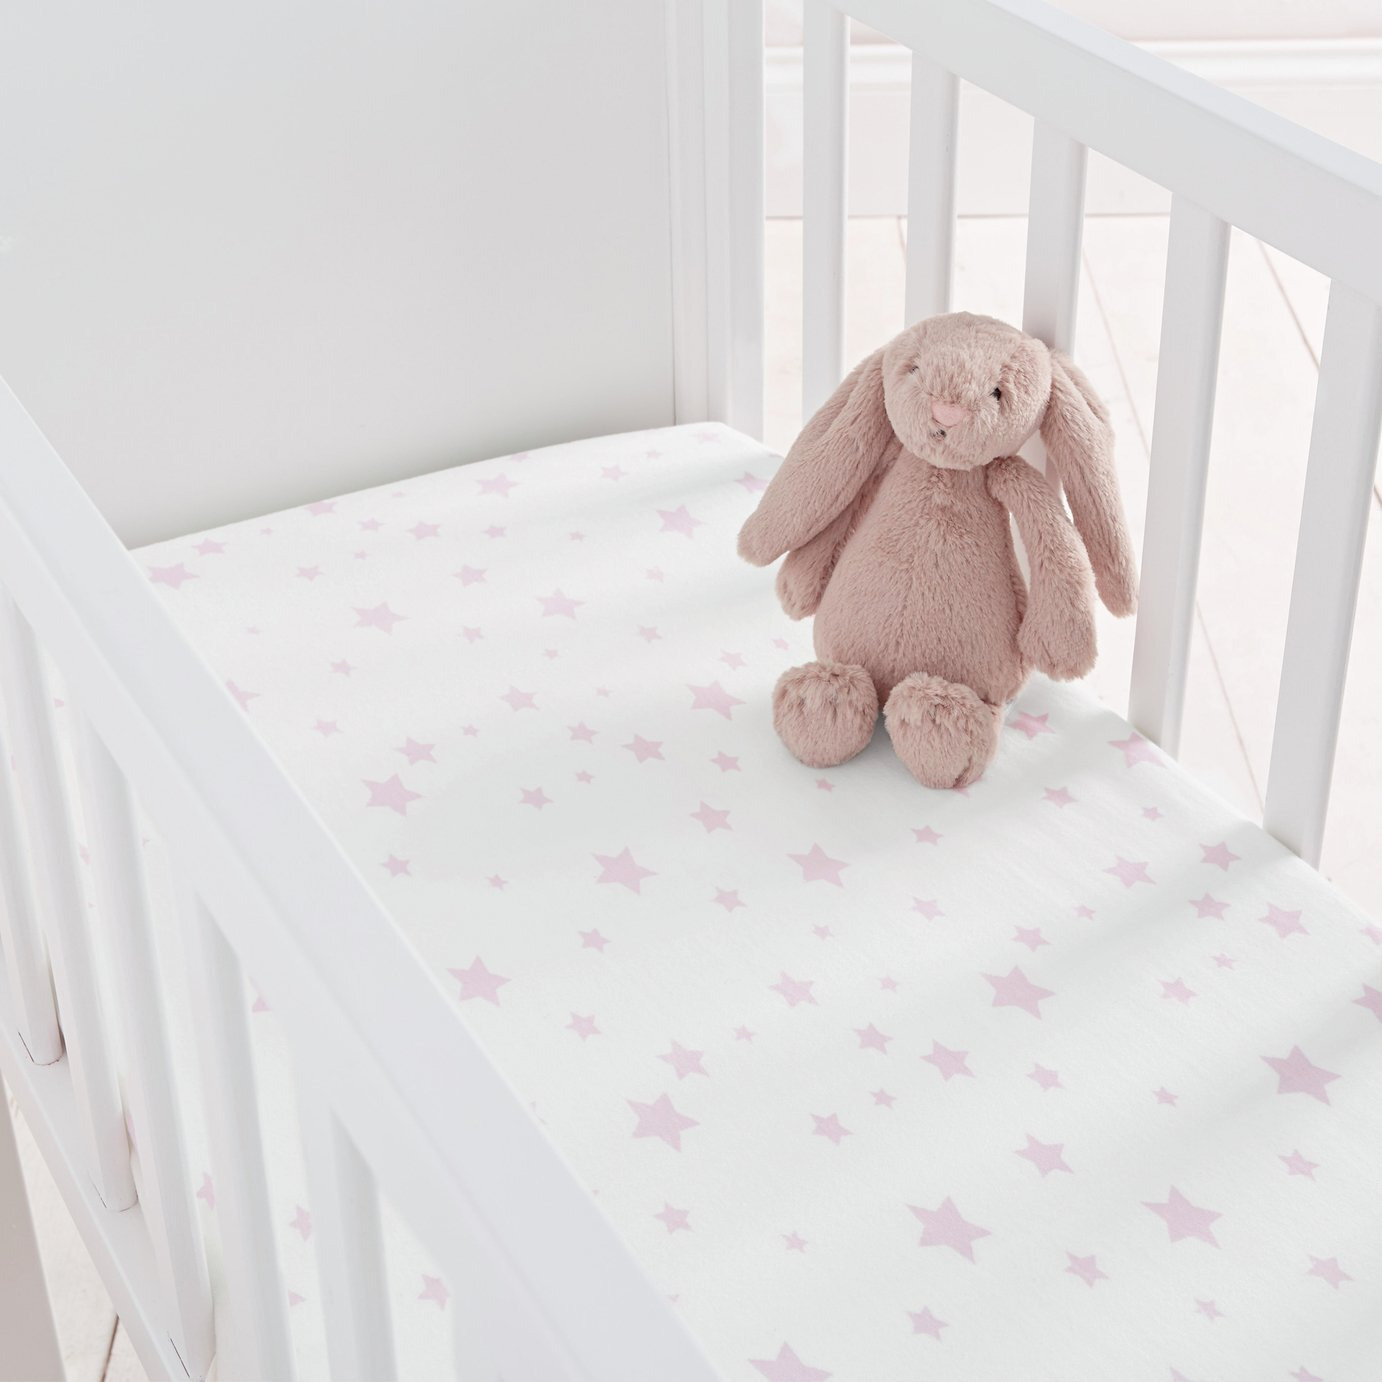 Silentnight Safe Nights Nursery Pink Fitted Sheets - Crib - image 1